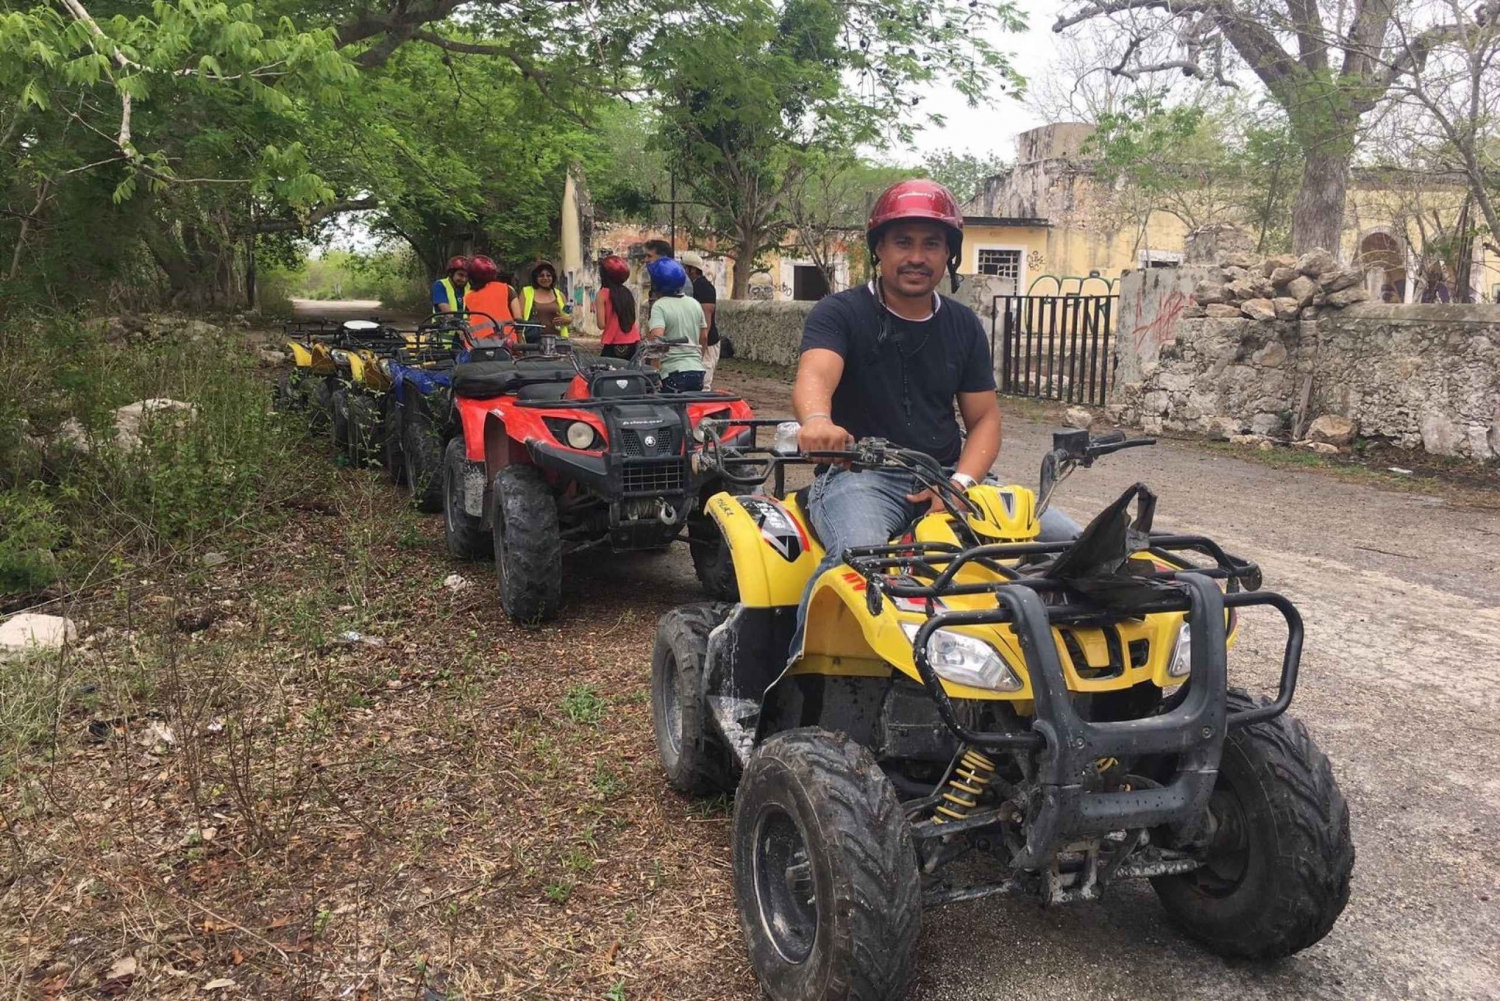 From Progreso: ATV Ghost Town Excursion & Beach Club Access